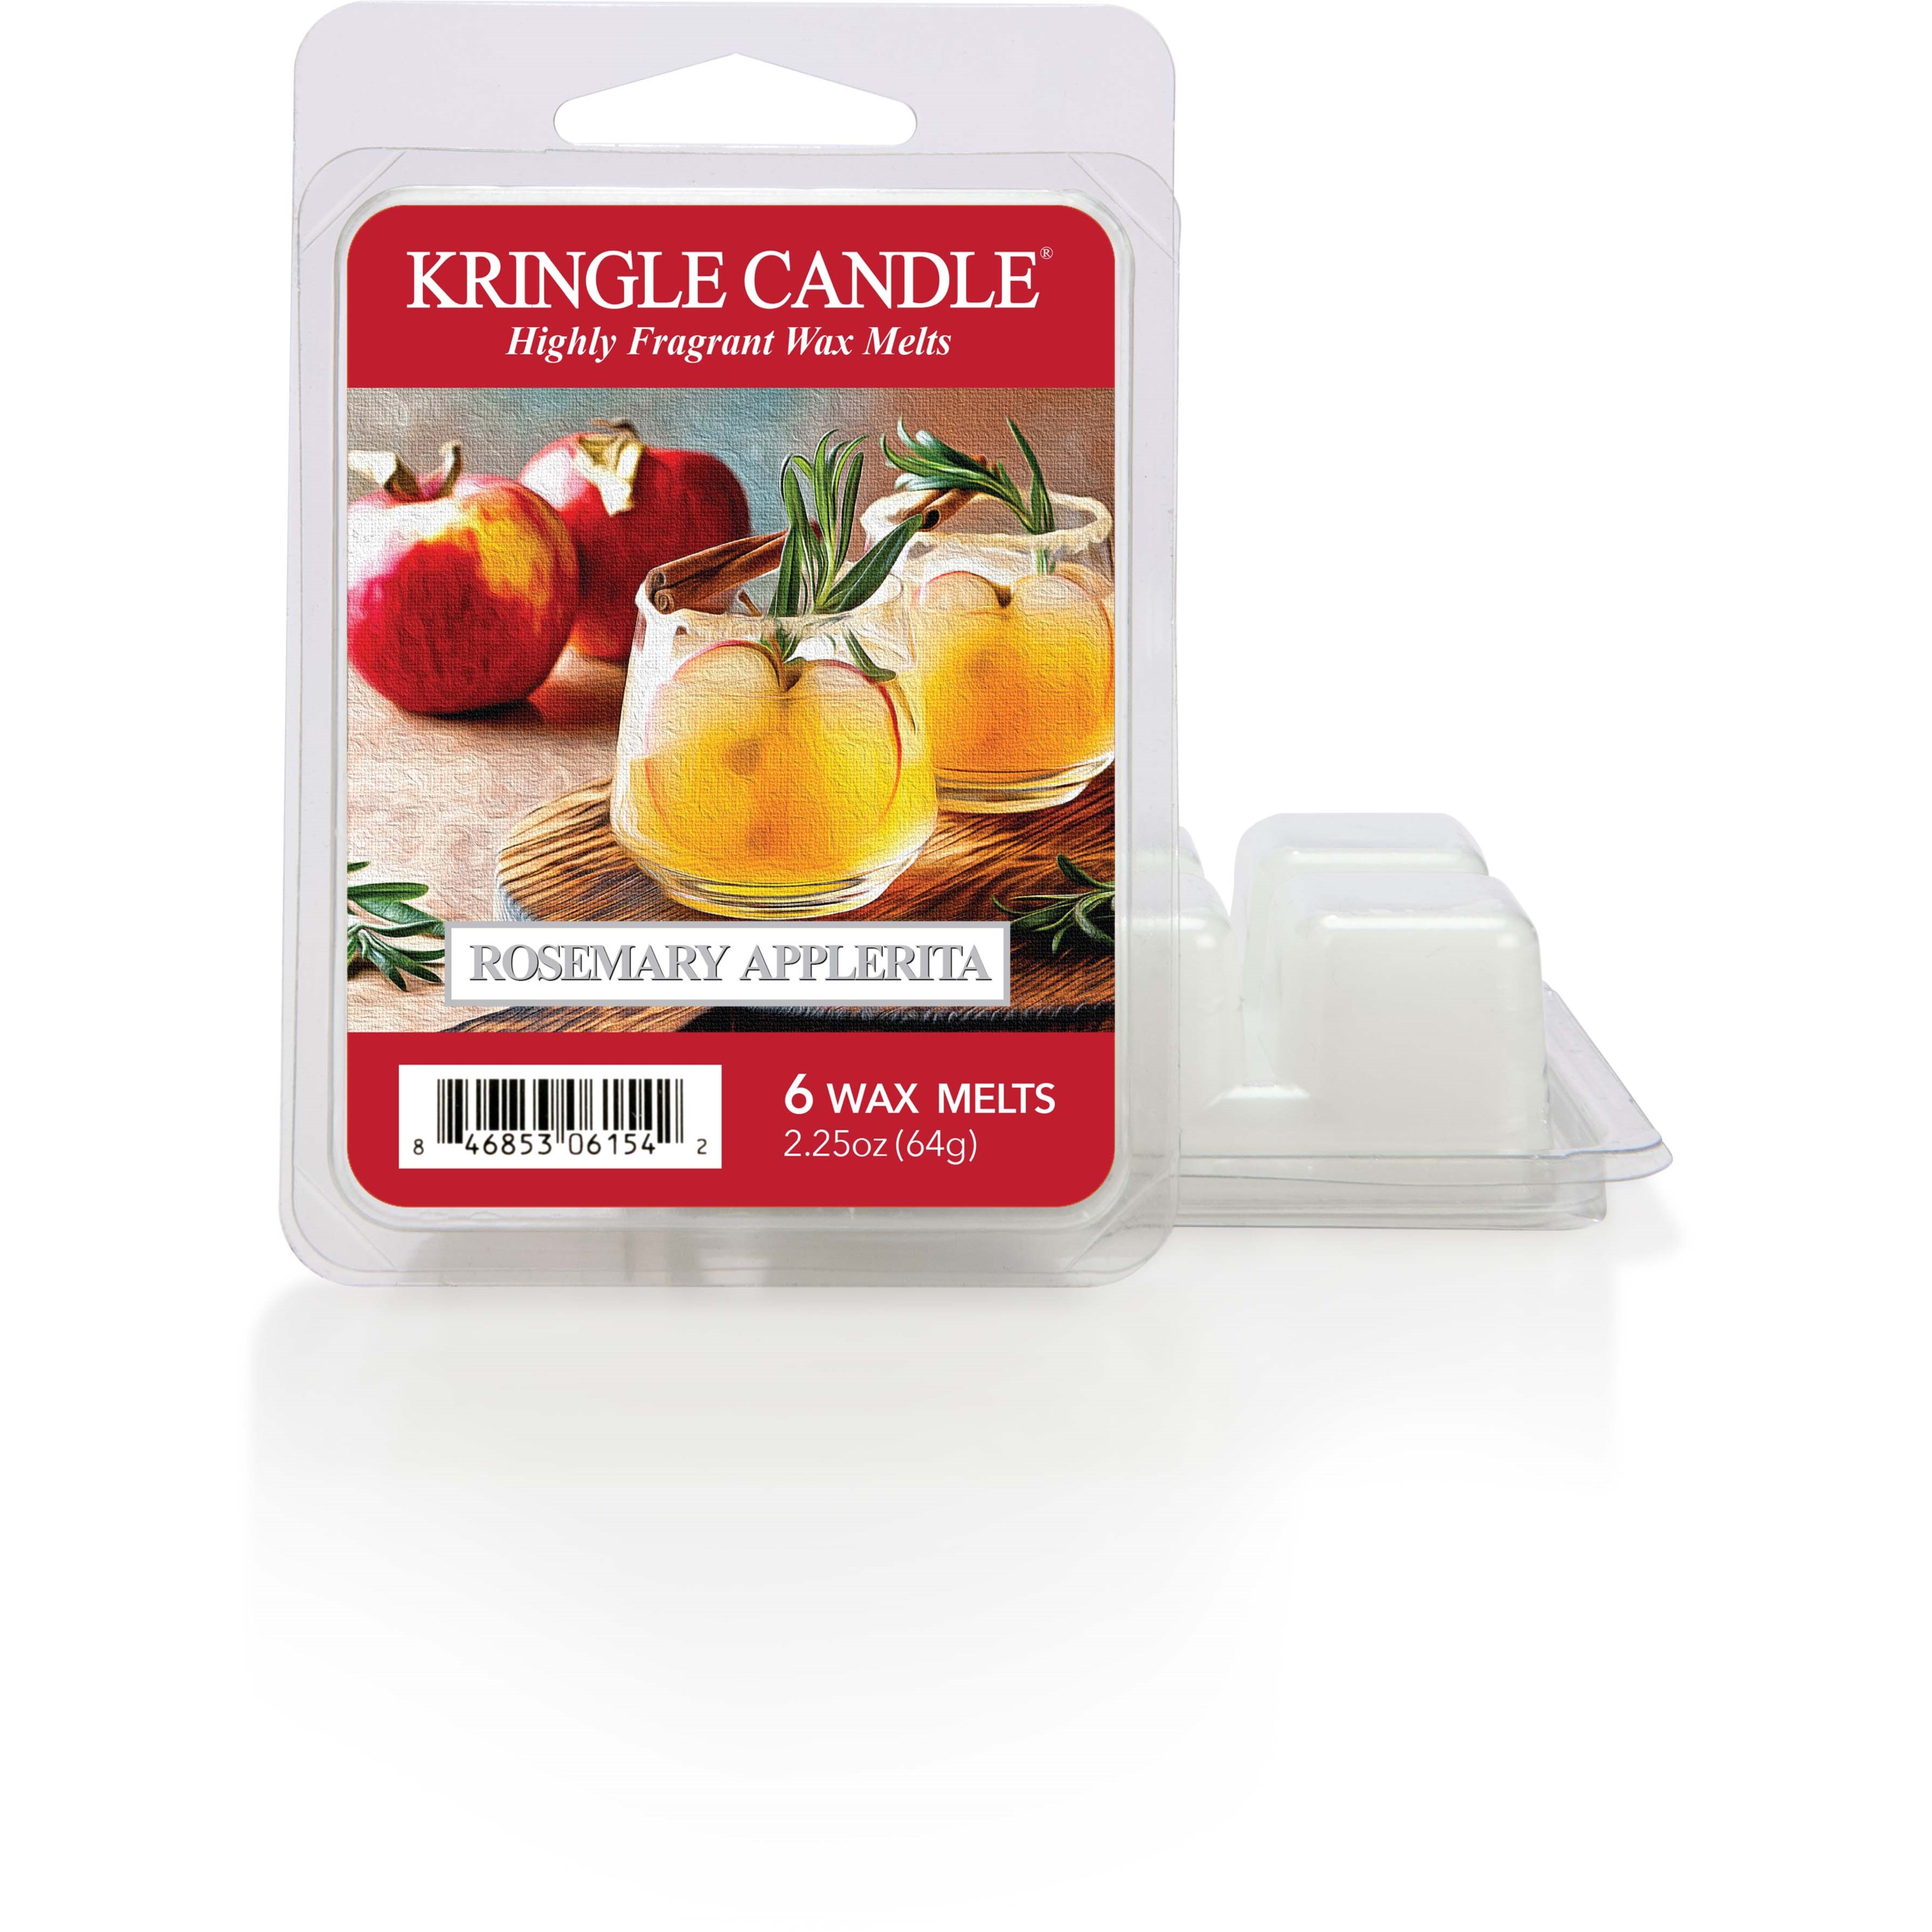 Kringle Candle Rosemary Applerita Wax Melts 64 g